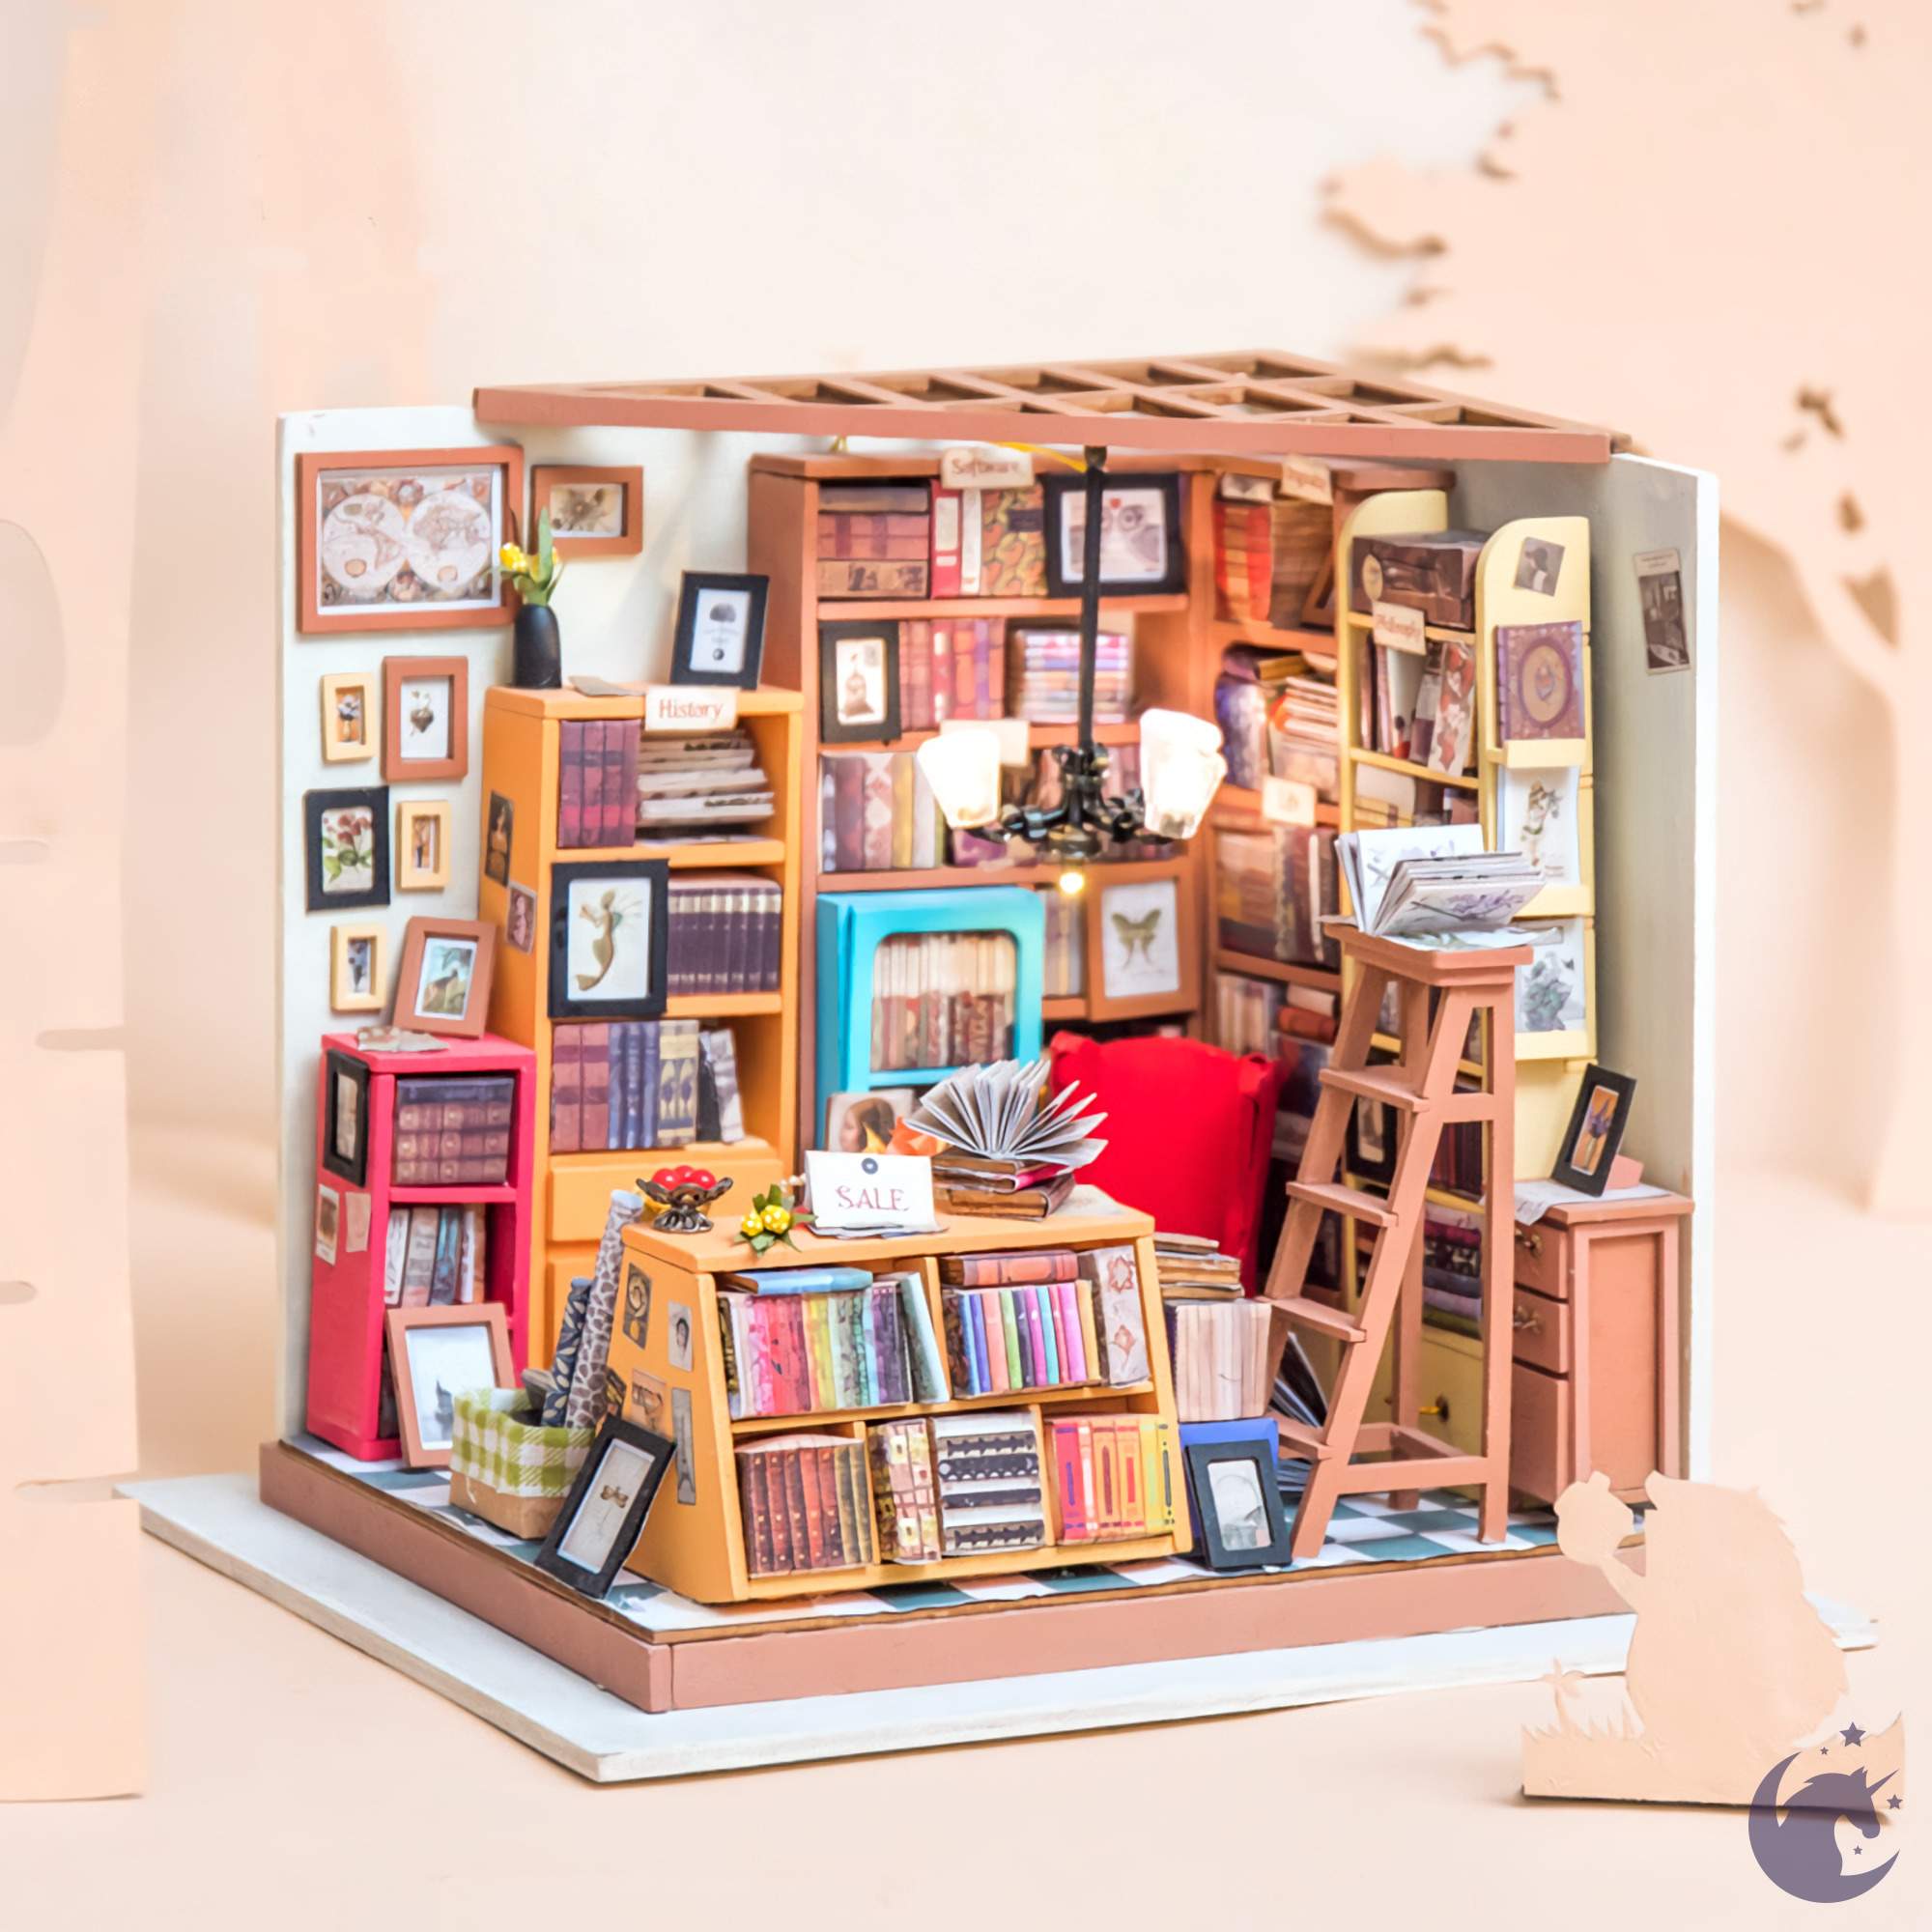 Rolife Kiki's Magic Emporium DIY Miniature House Kit DG155 - Robotime Store